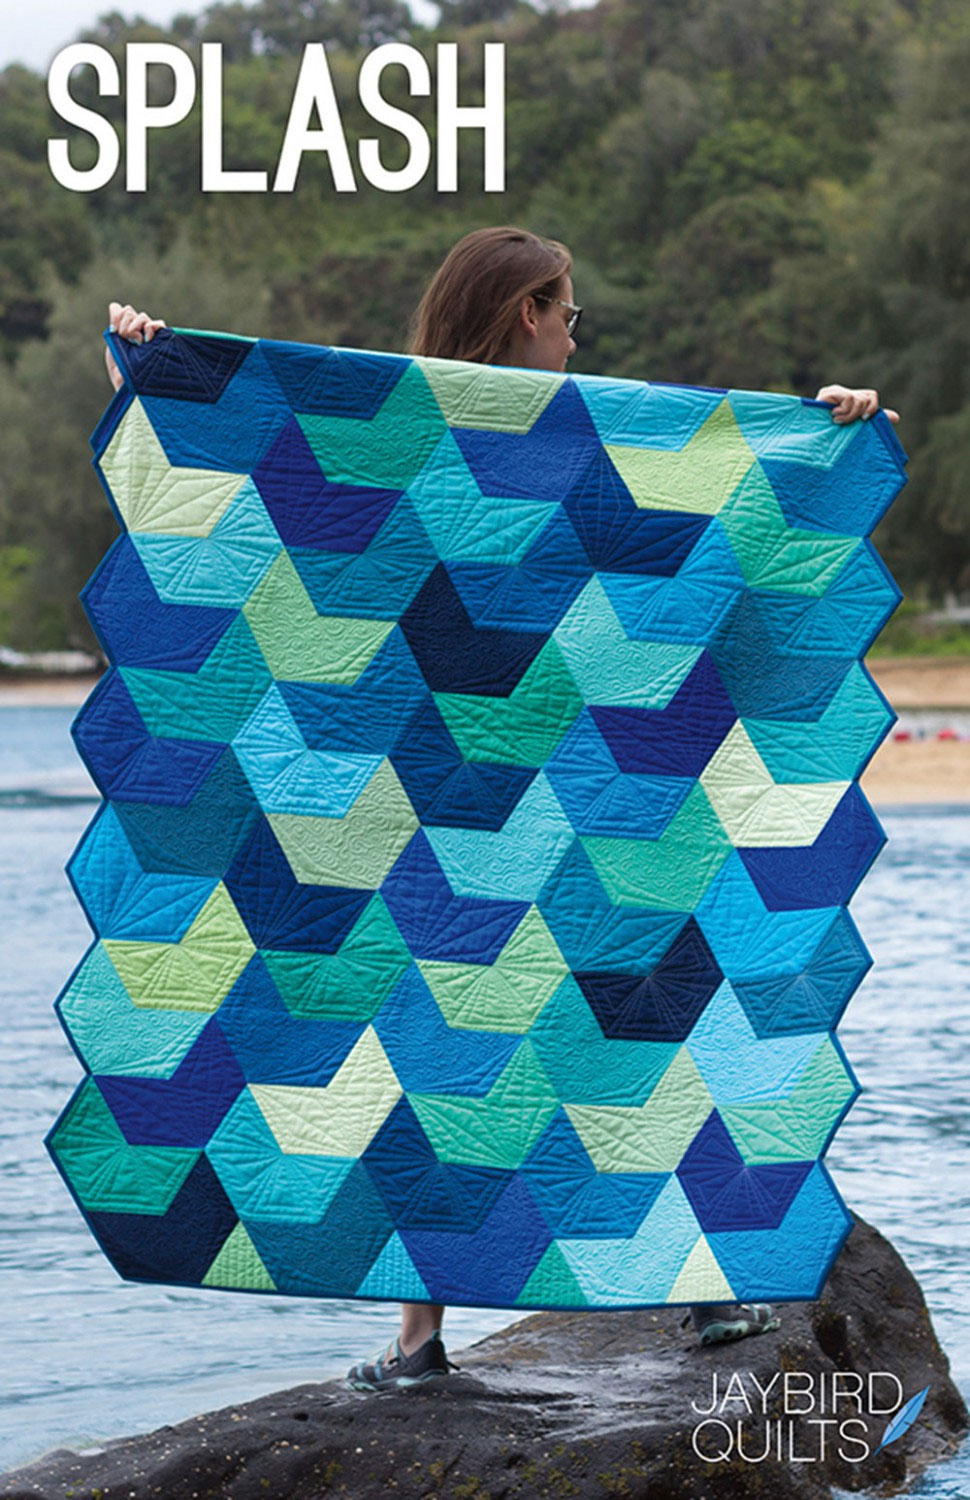 Splash-quilt-sewing-pattern-Jaybird-Quilts-front